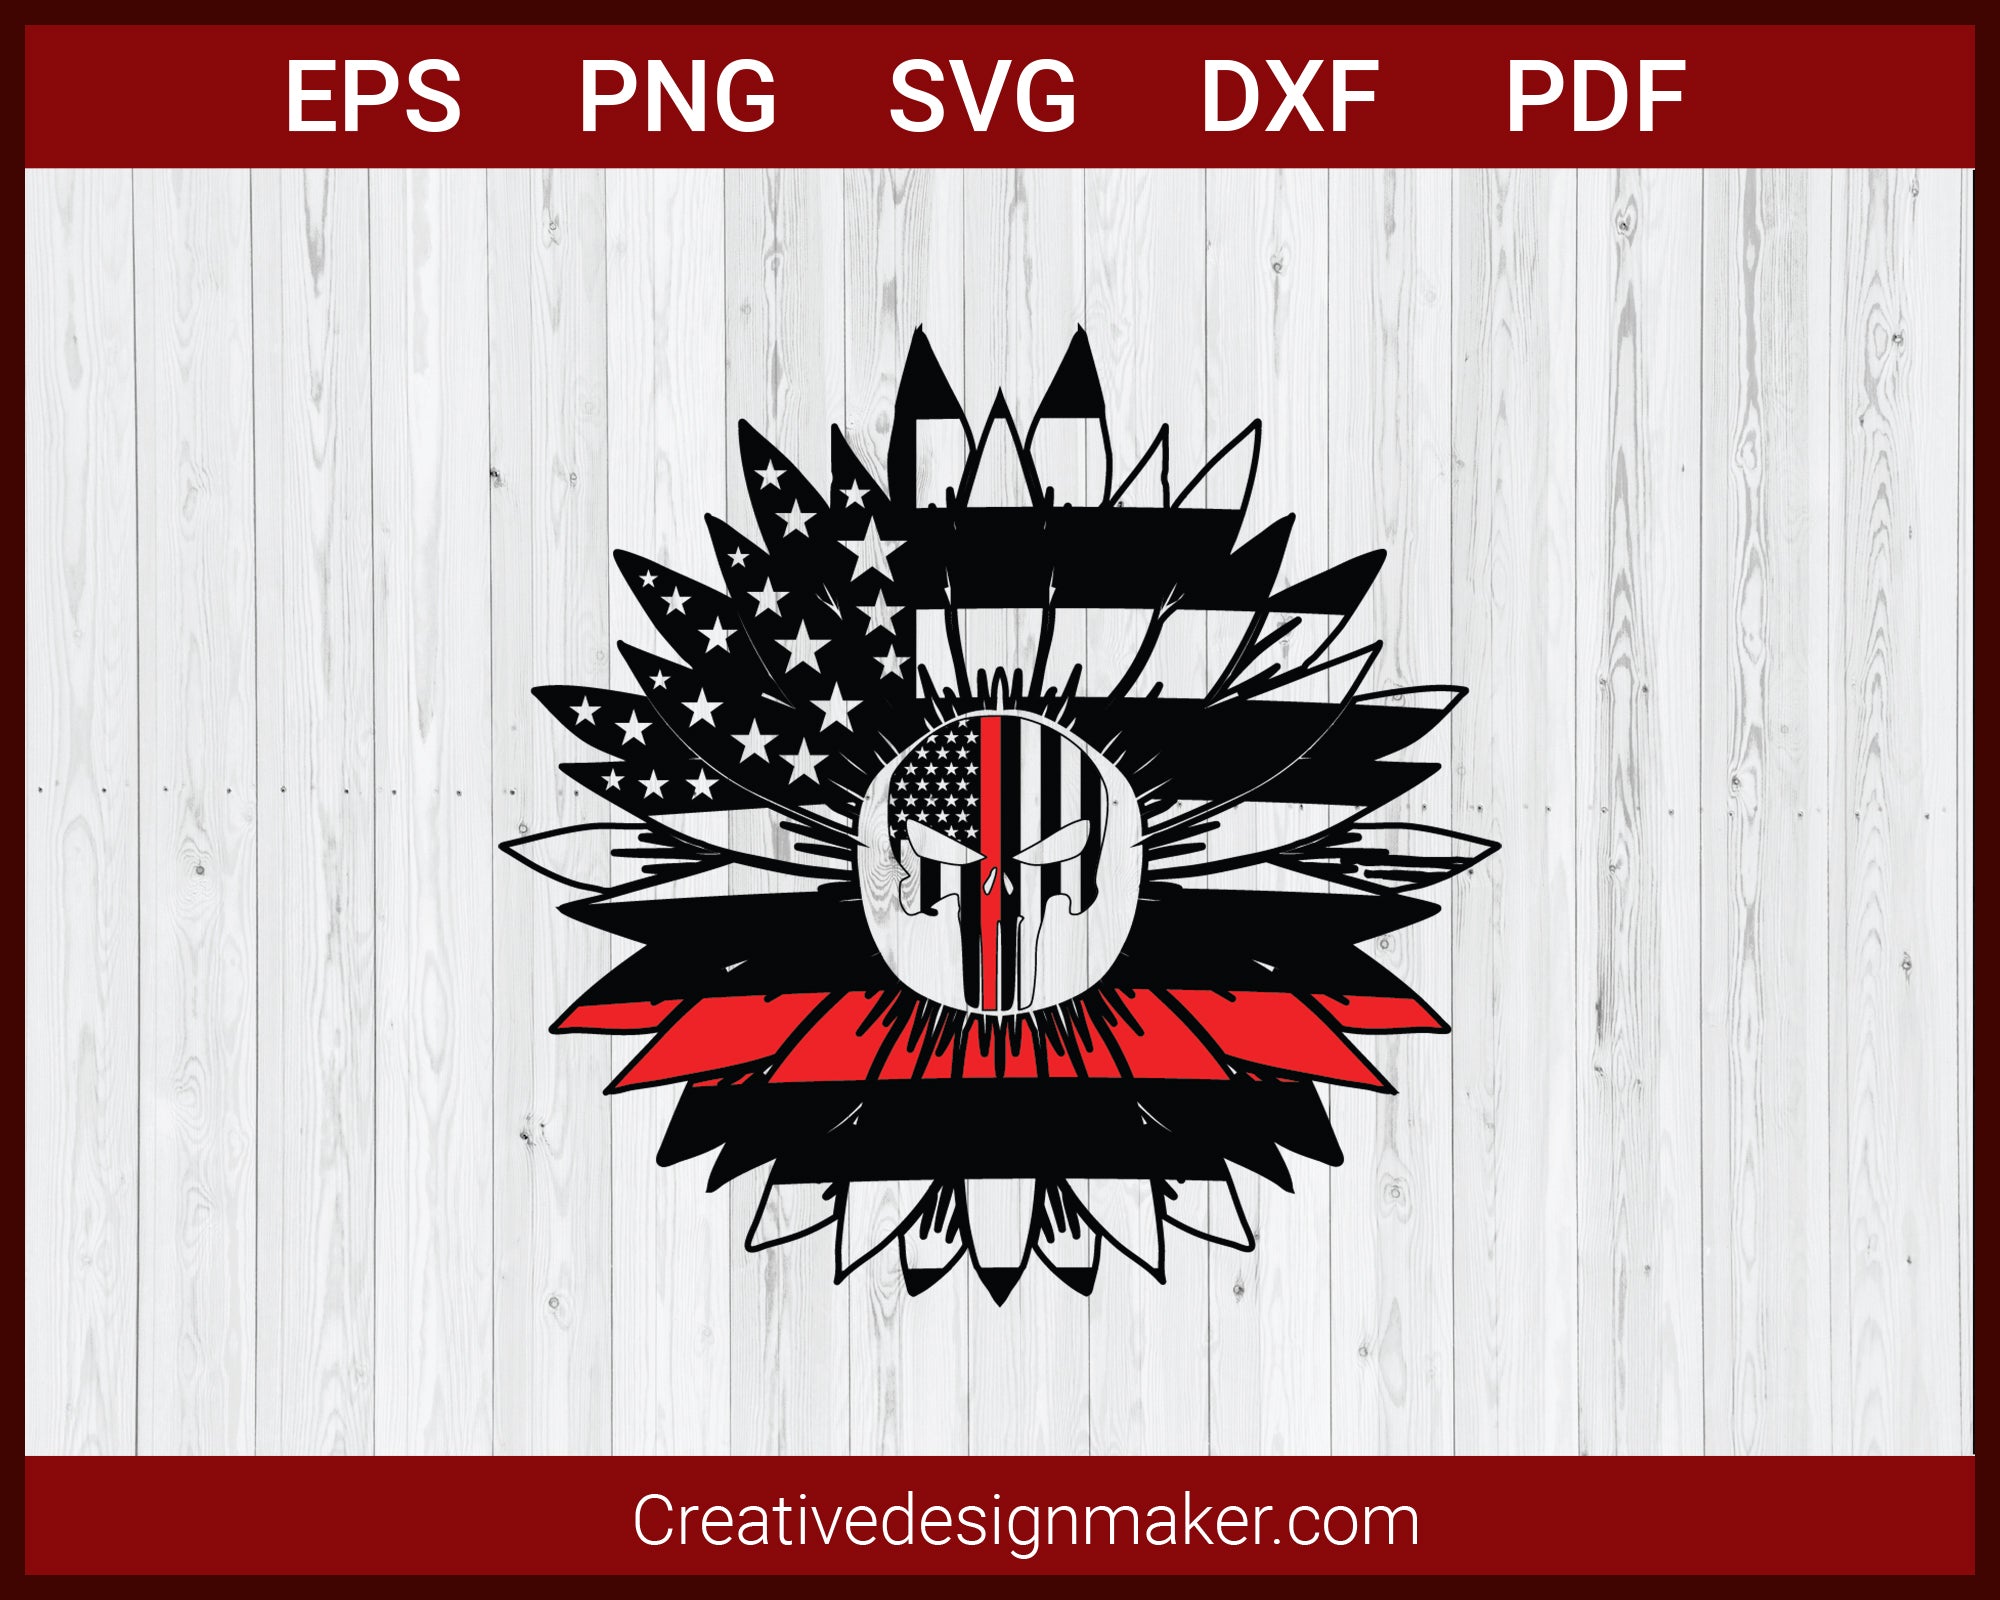 Sunflower USA Flag Punisher Skull SVG Cricut Silhouette DXF PNG EPS Cut File